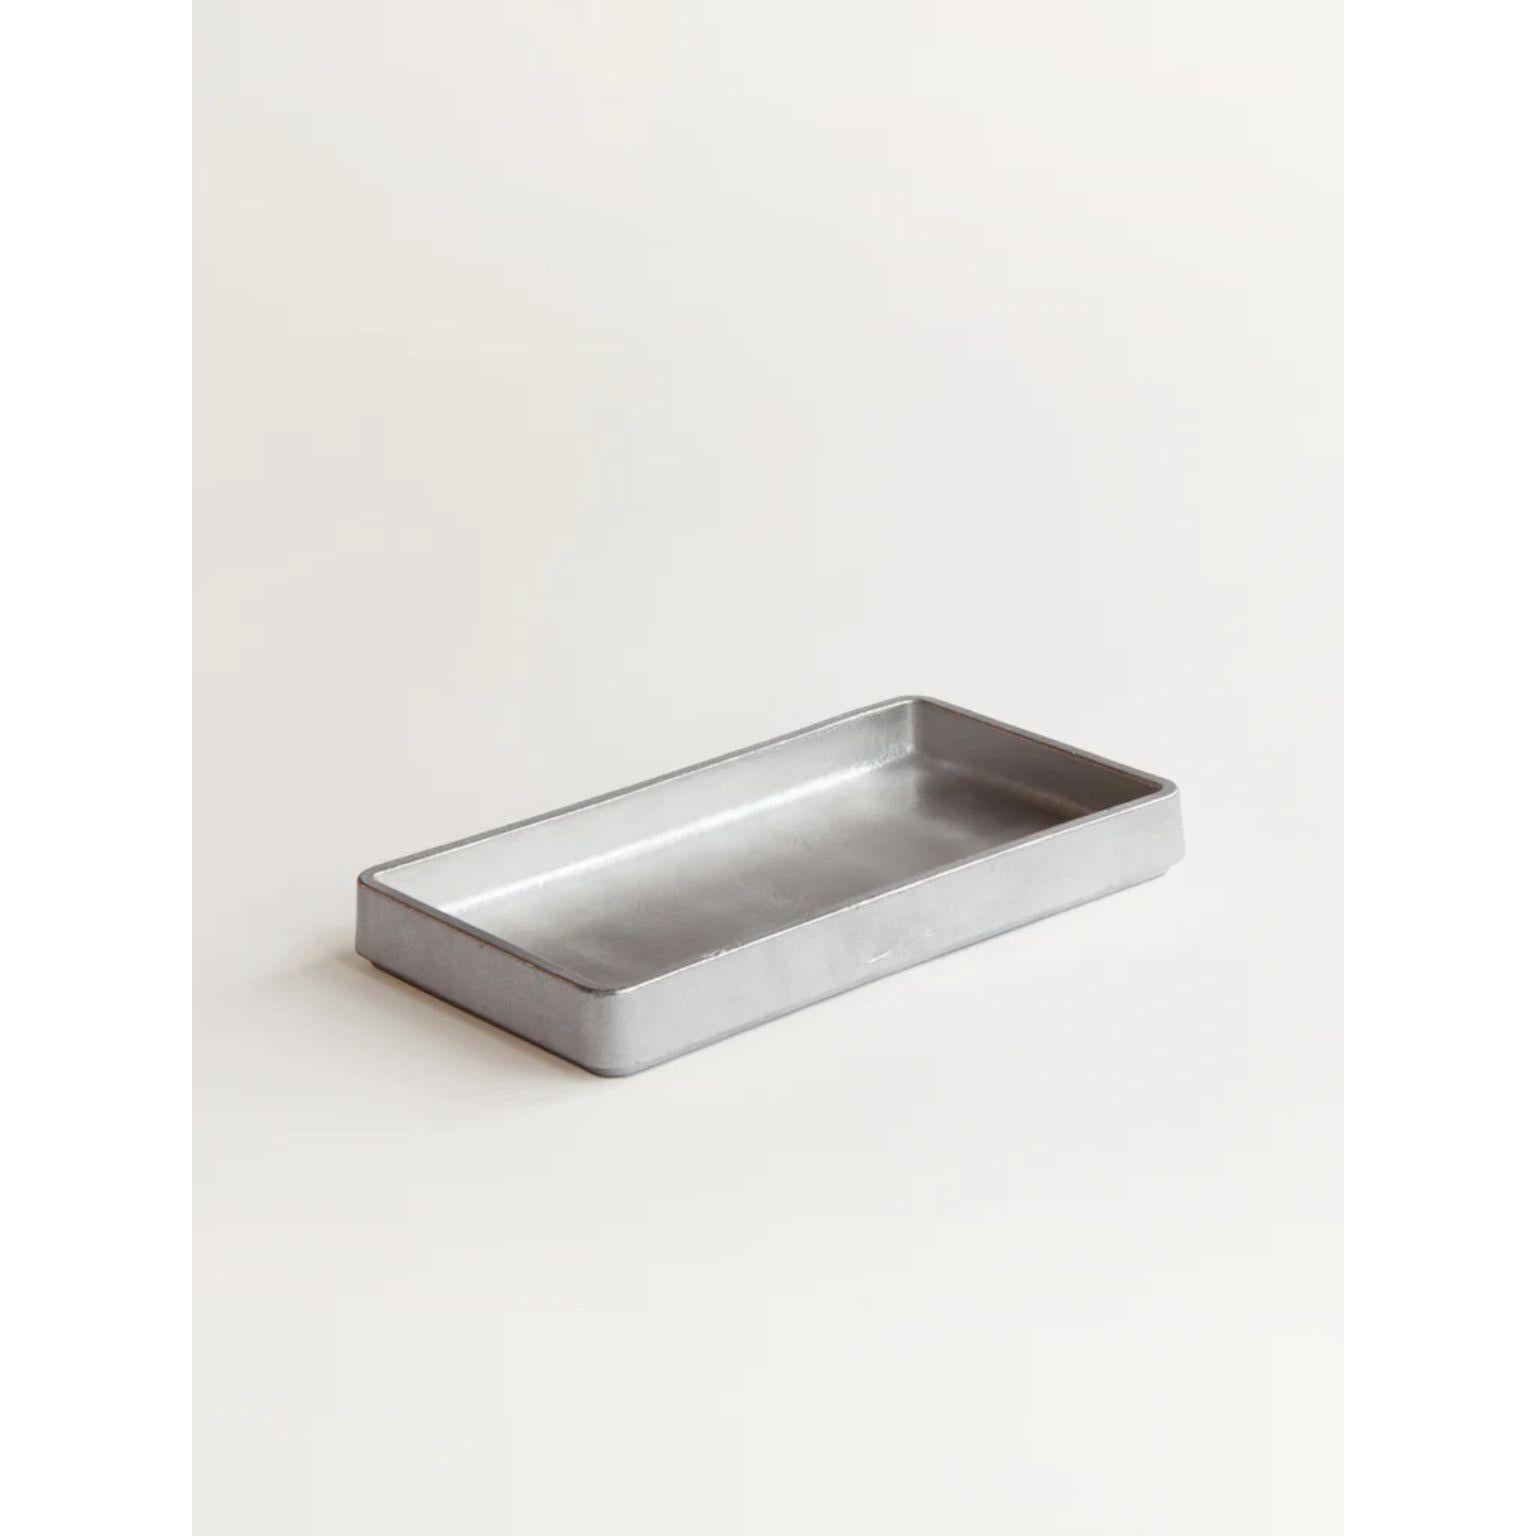 Modern Set of 2 Aluminum Plato Table Trays by Stem Design For Sale